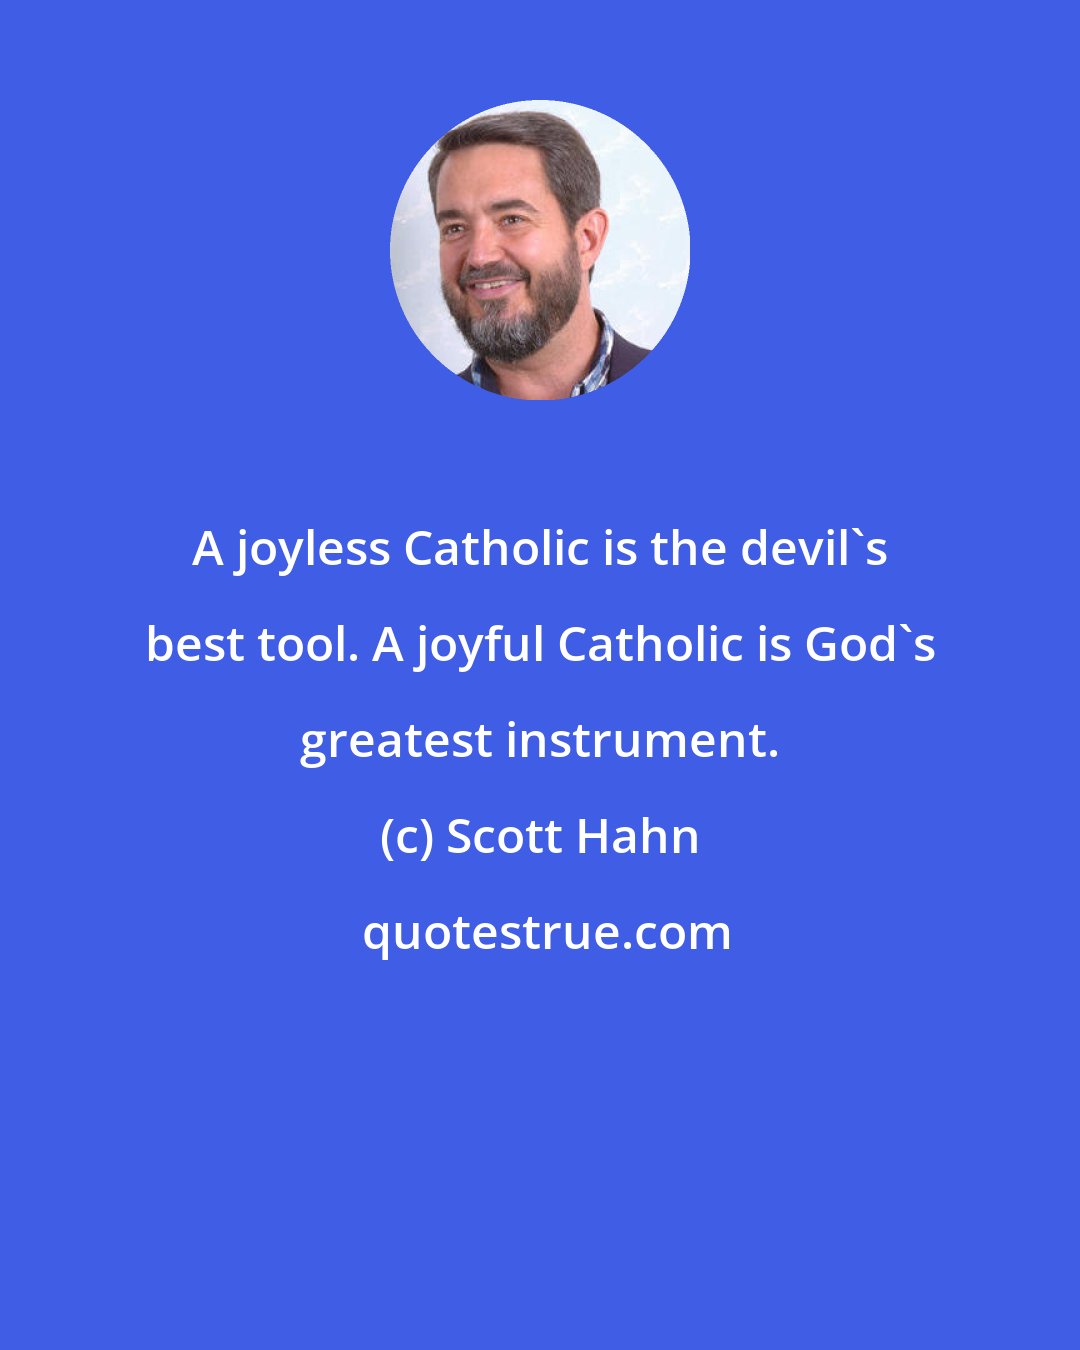 Scott Hahn: A joyless Catholic is the devil's best tool. A joyful Catholic is God's greatest instrument.